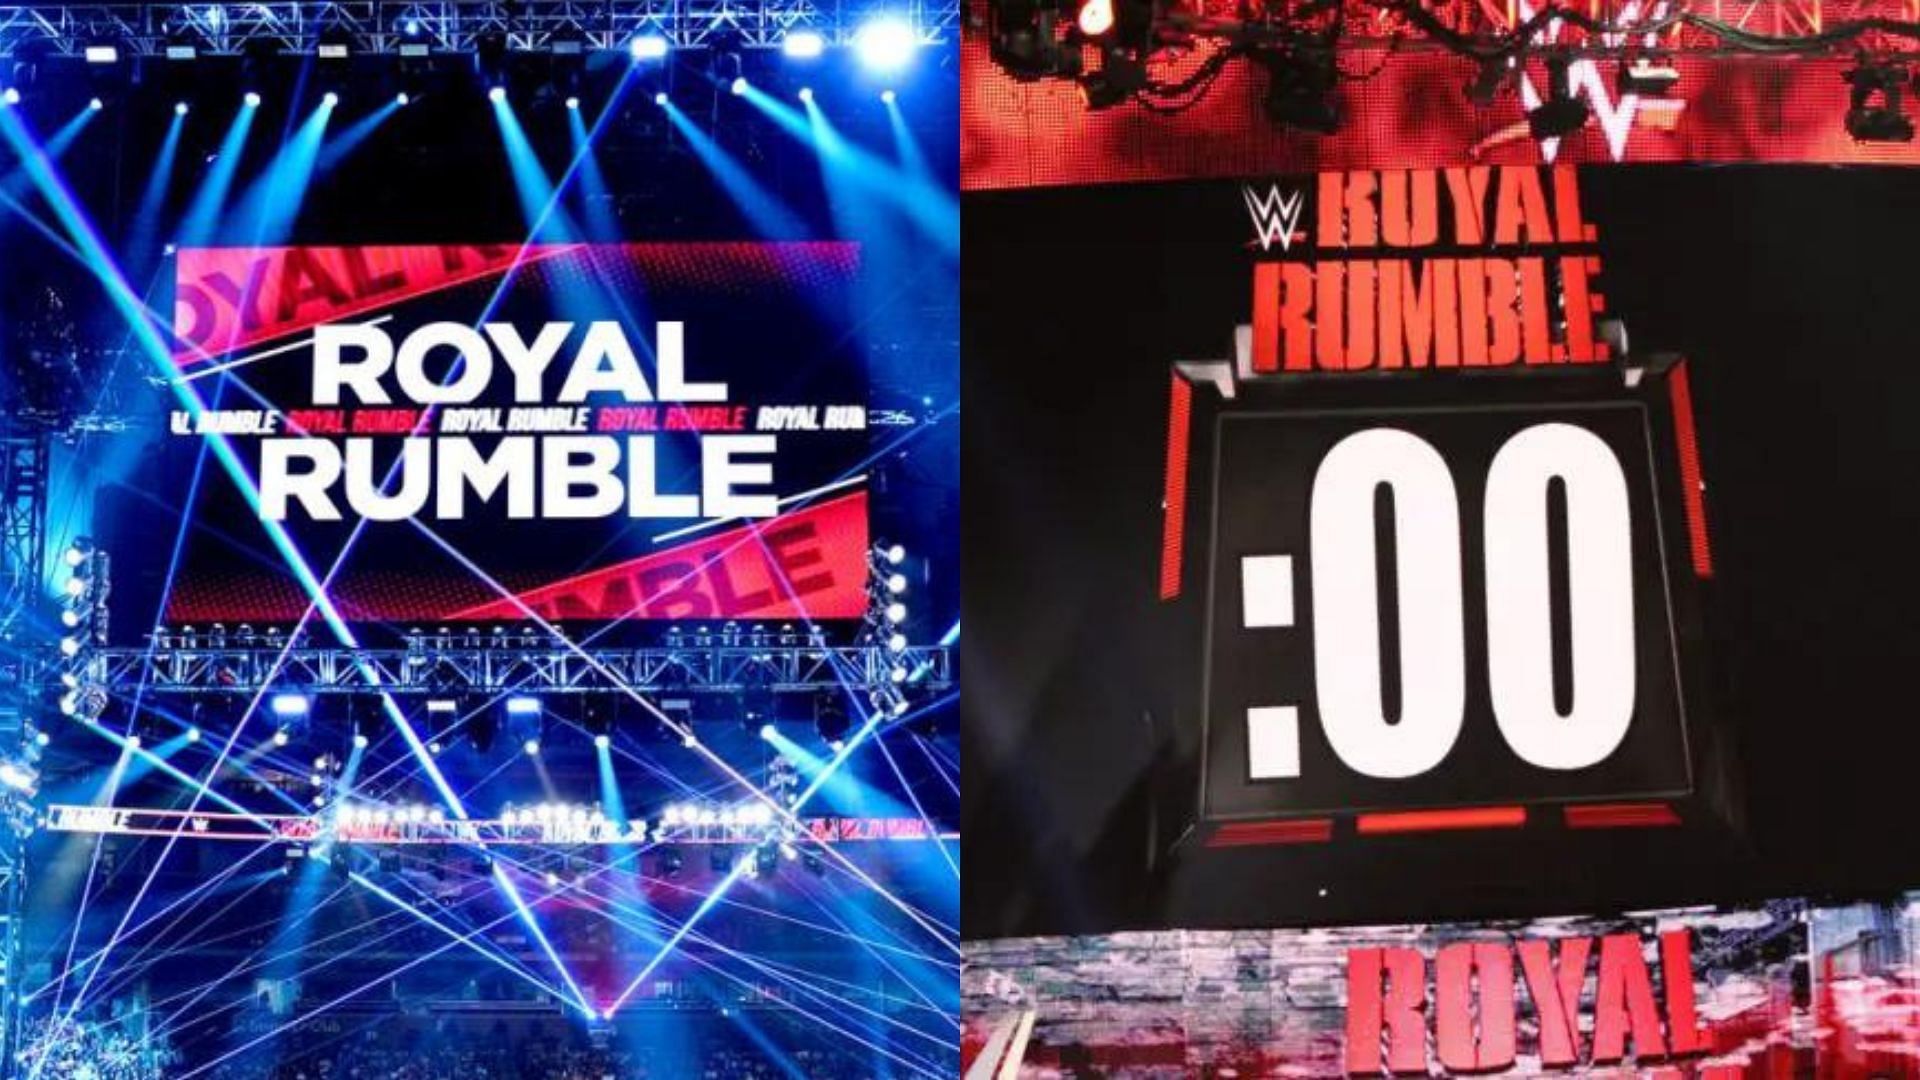 The Royal Rumble kicks off the road to WrestleMania!